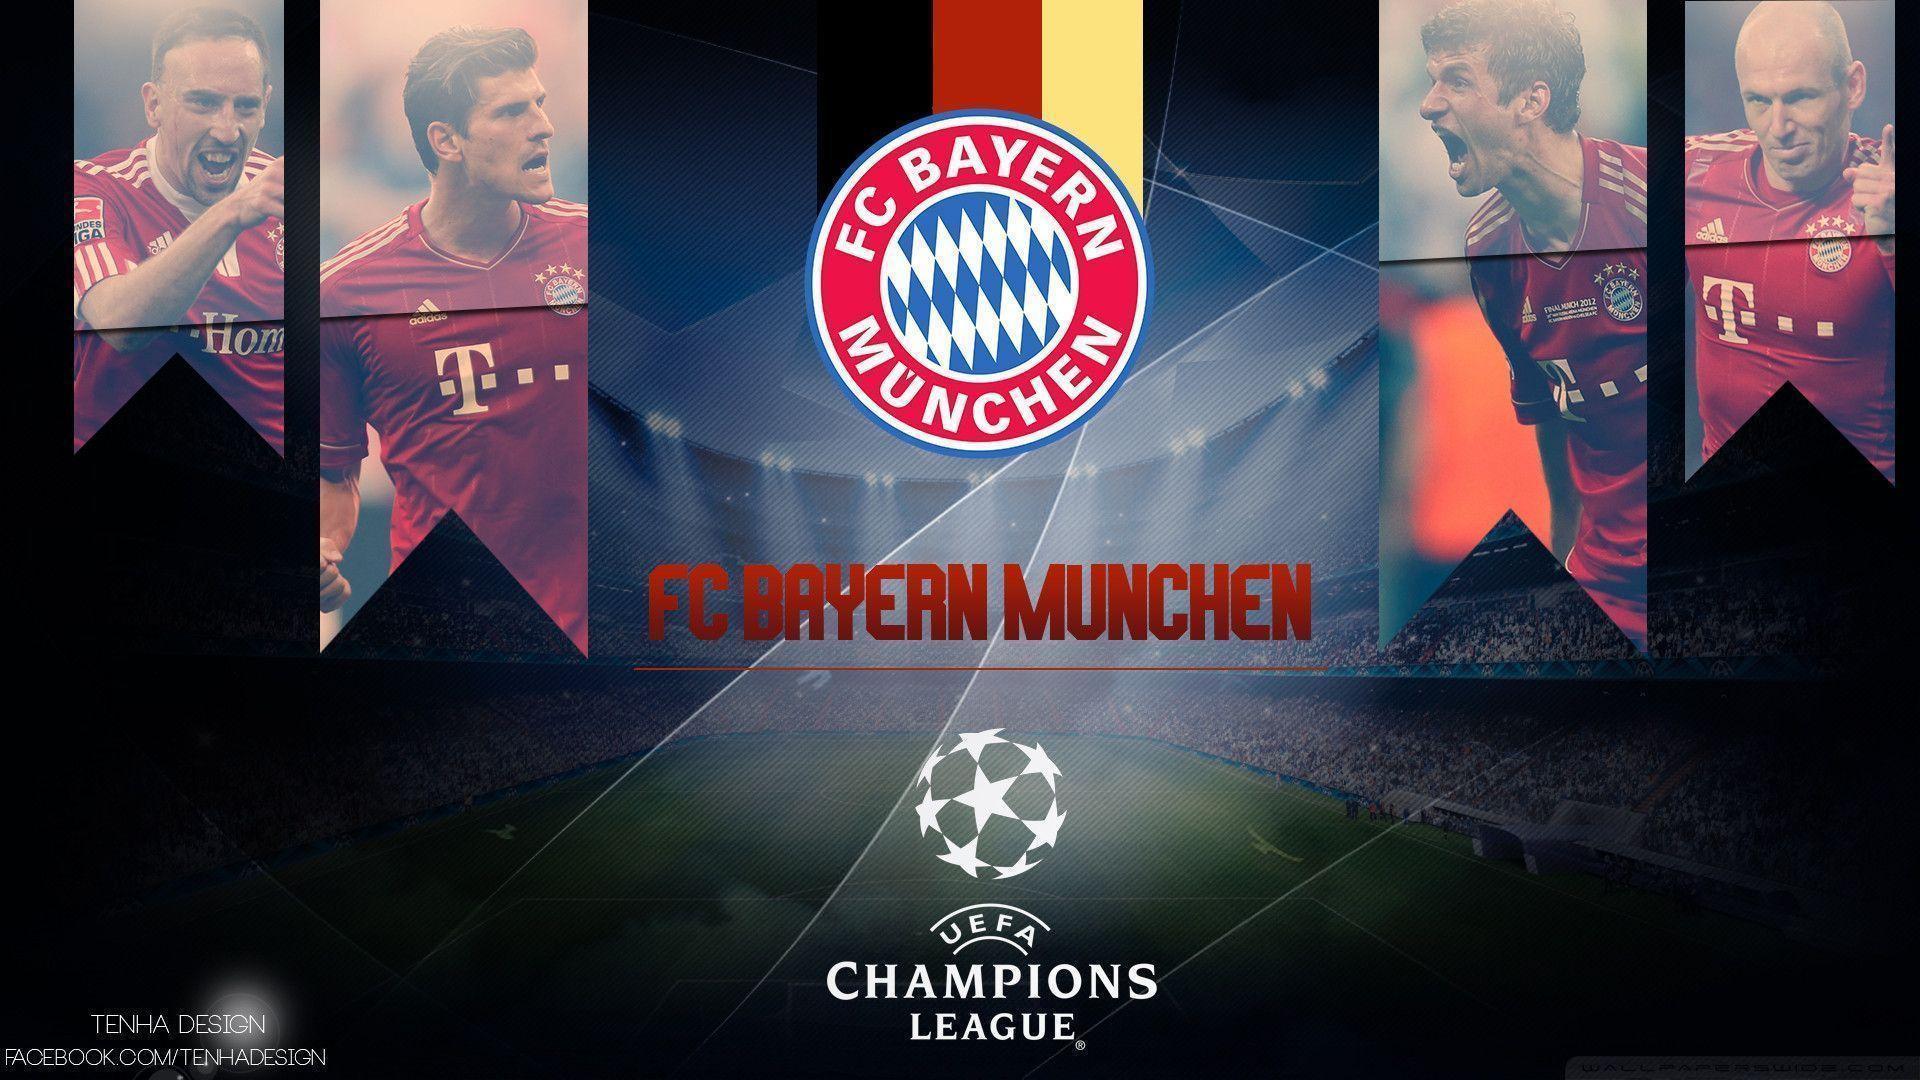 Bayern Munich FC Windows 8 Wallpaper. Download free windows 8 HD